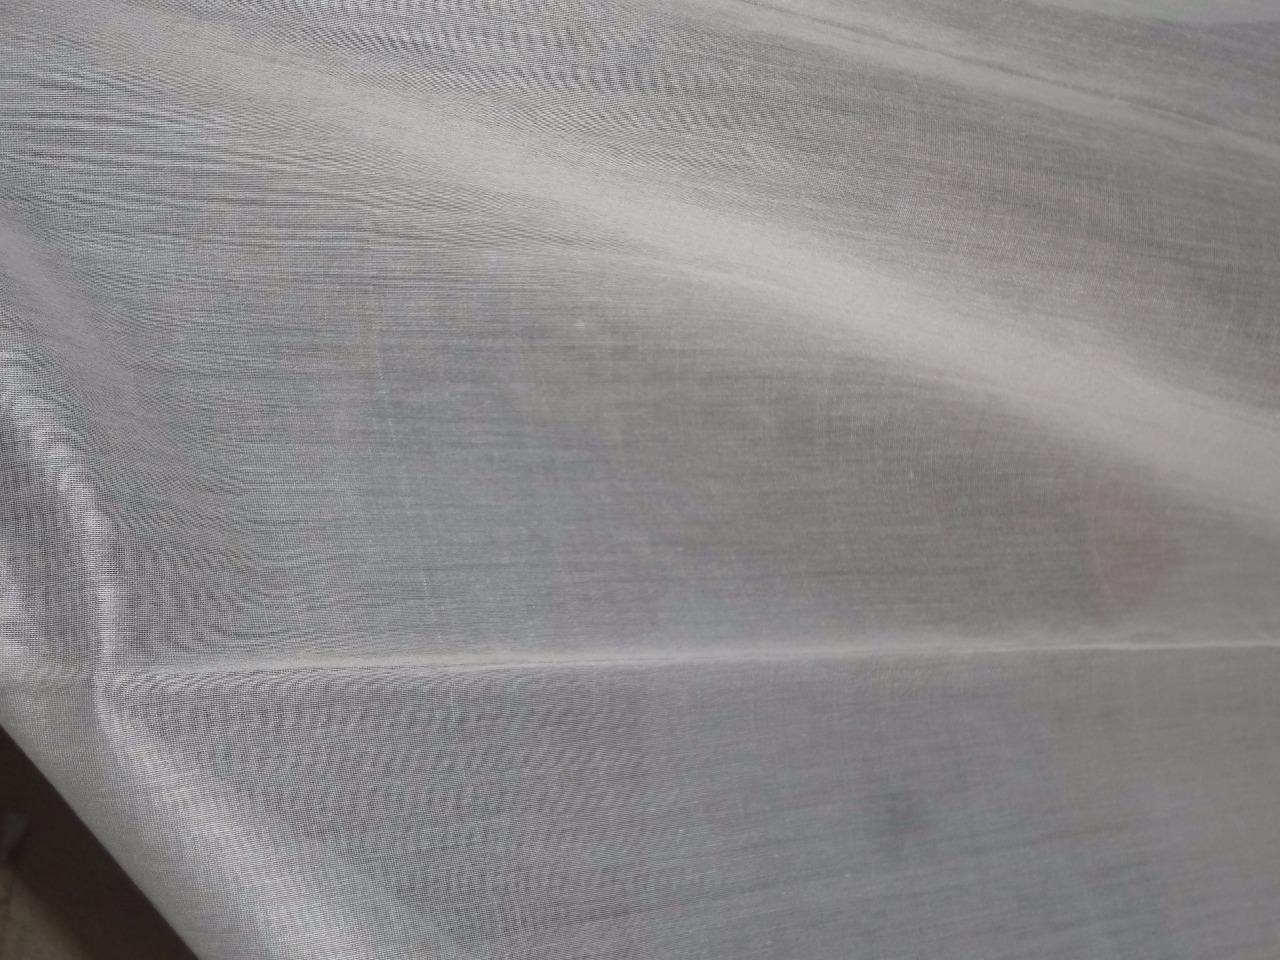 Silk / cotton spun yarn sheer chanderi fabric 44 inches wide